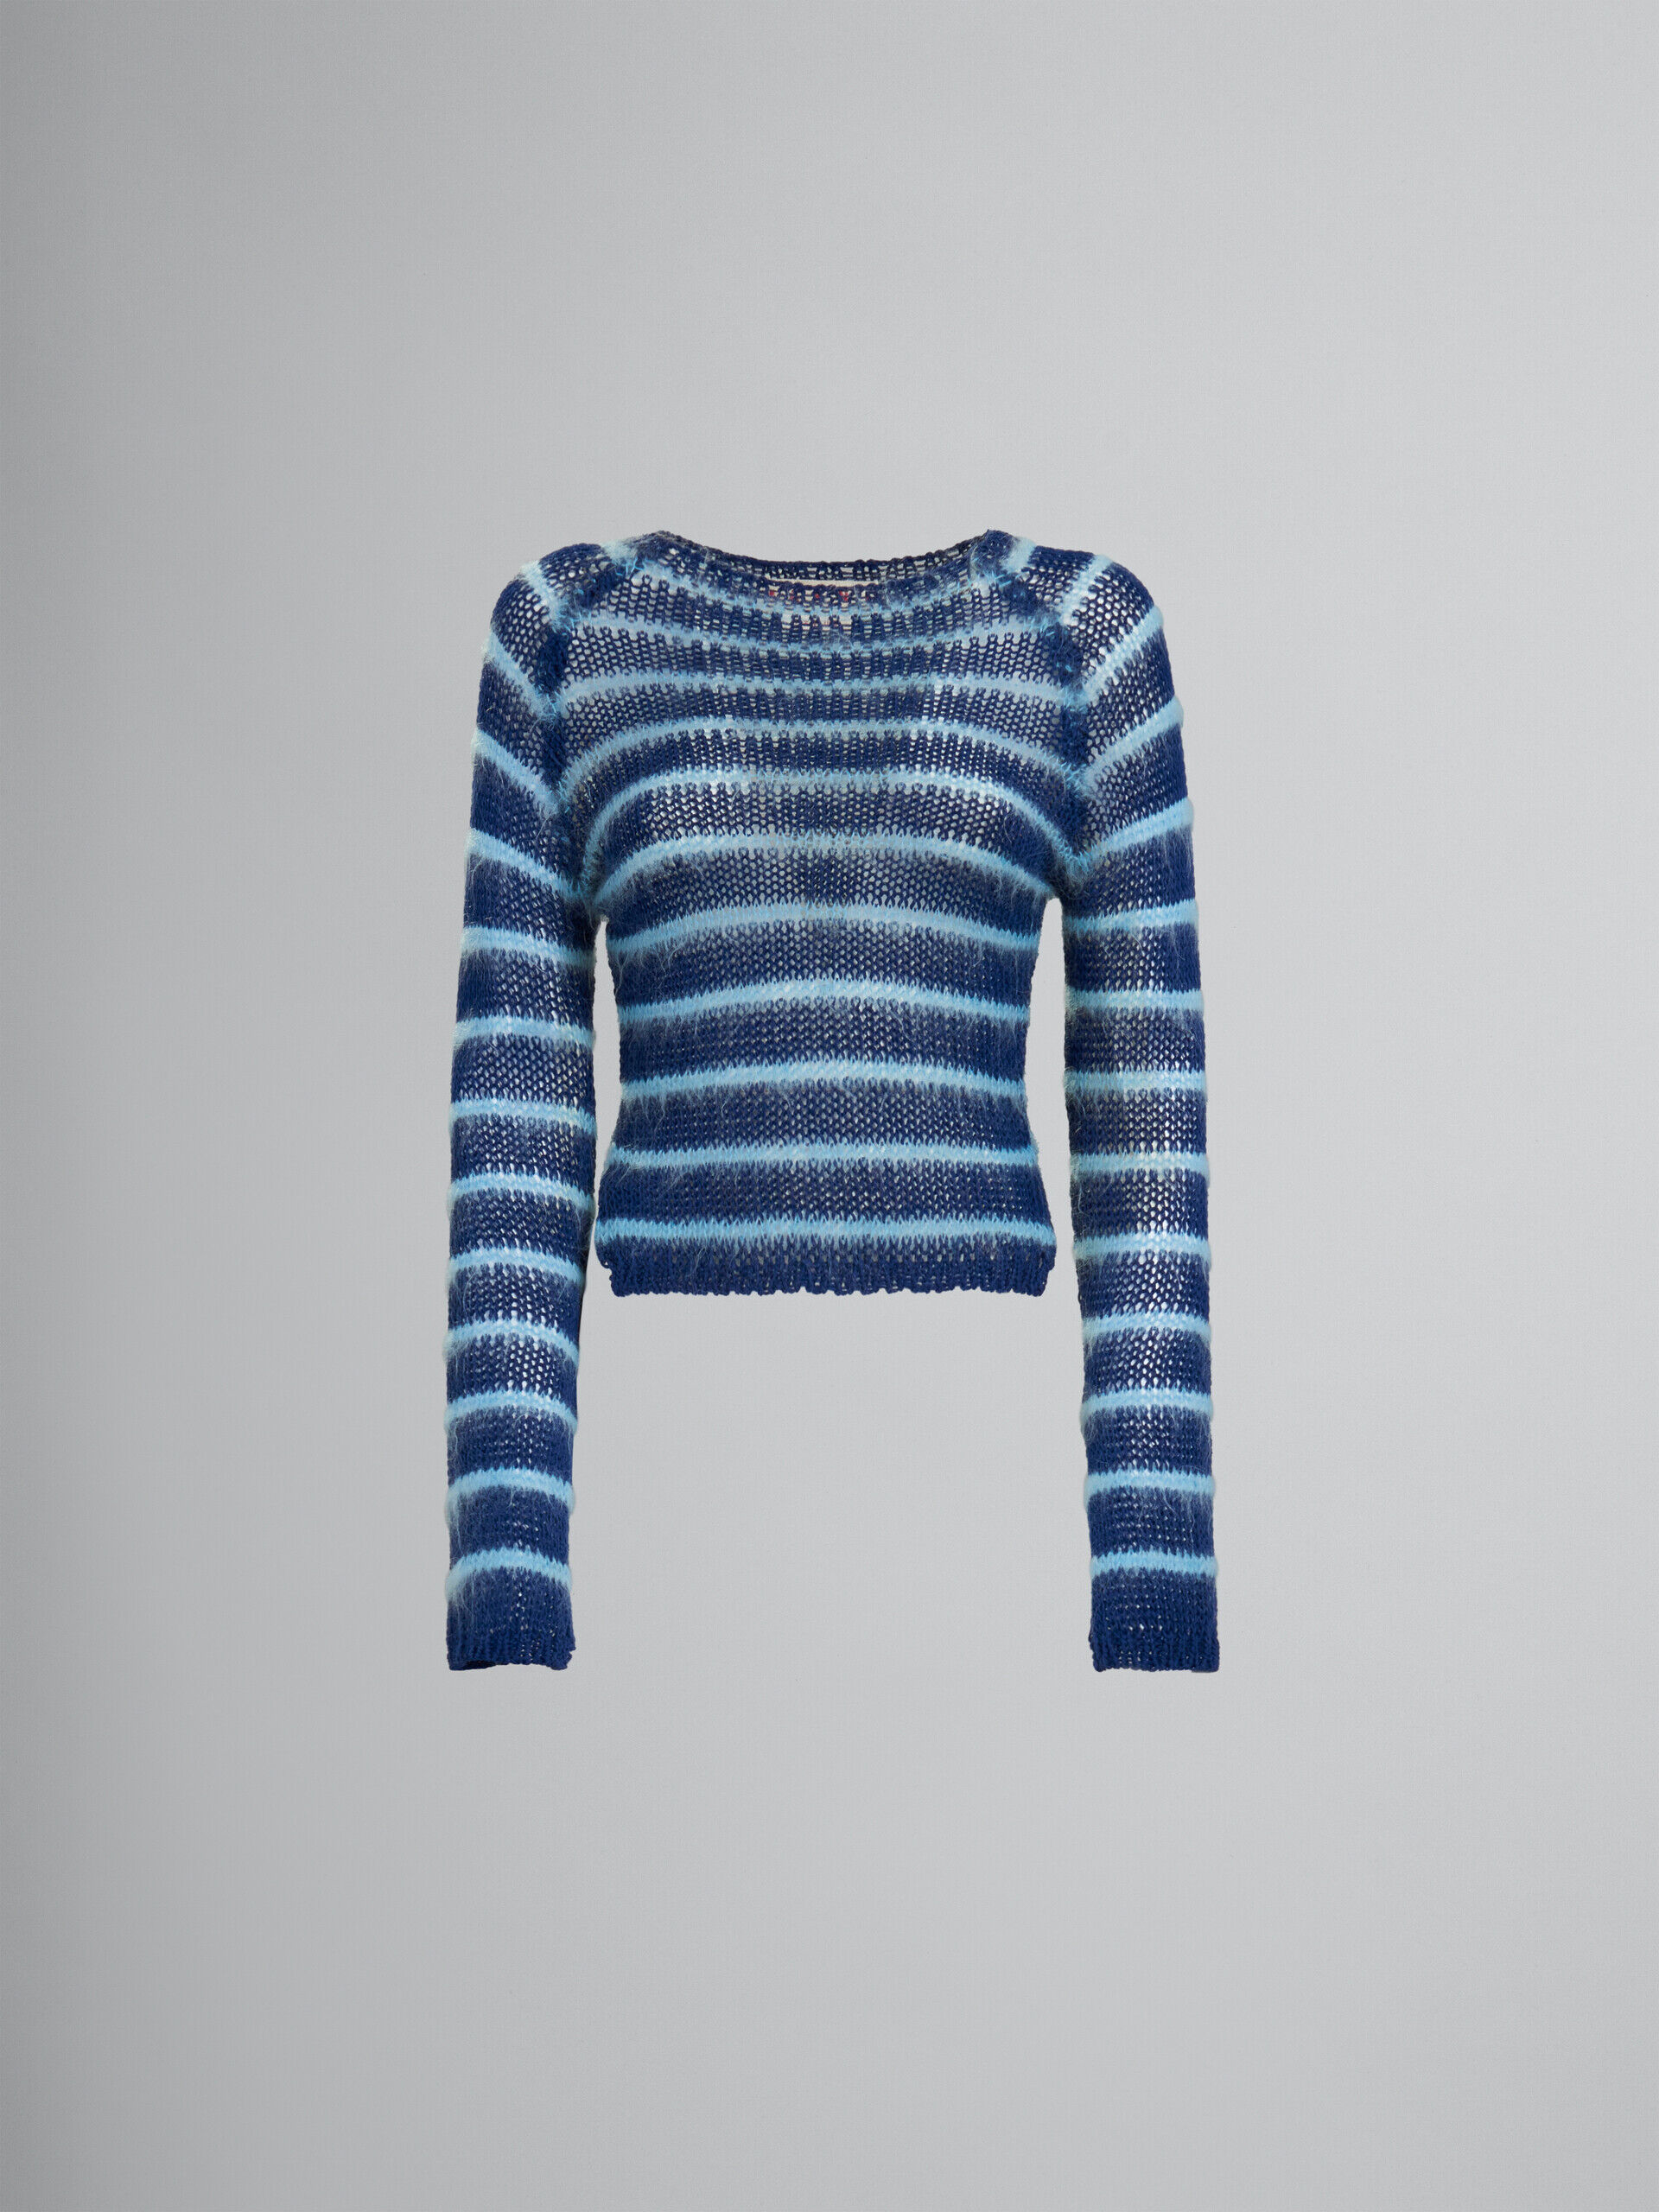 Marni Blue Striped Sweater